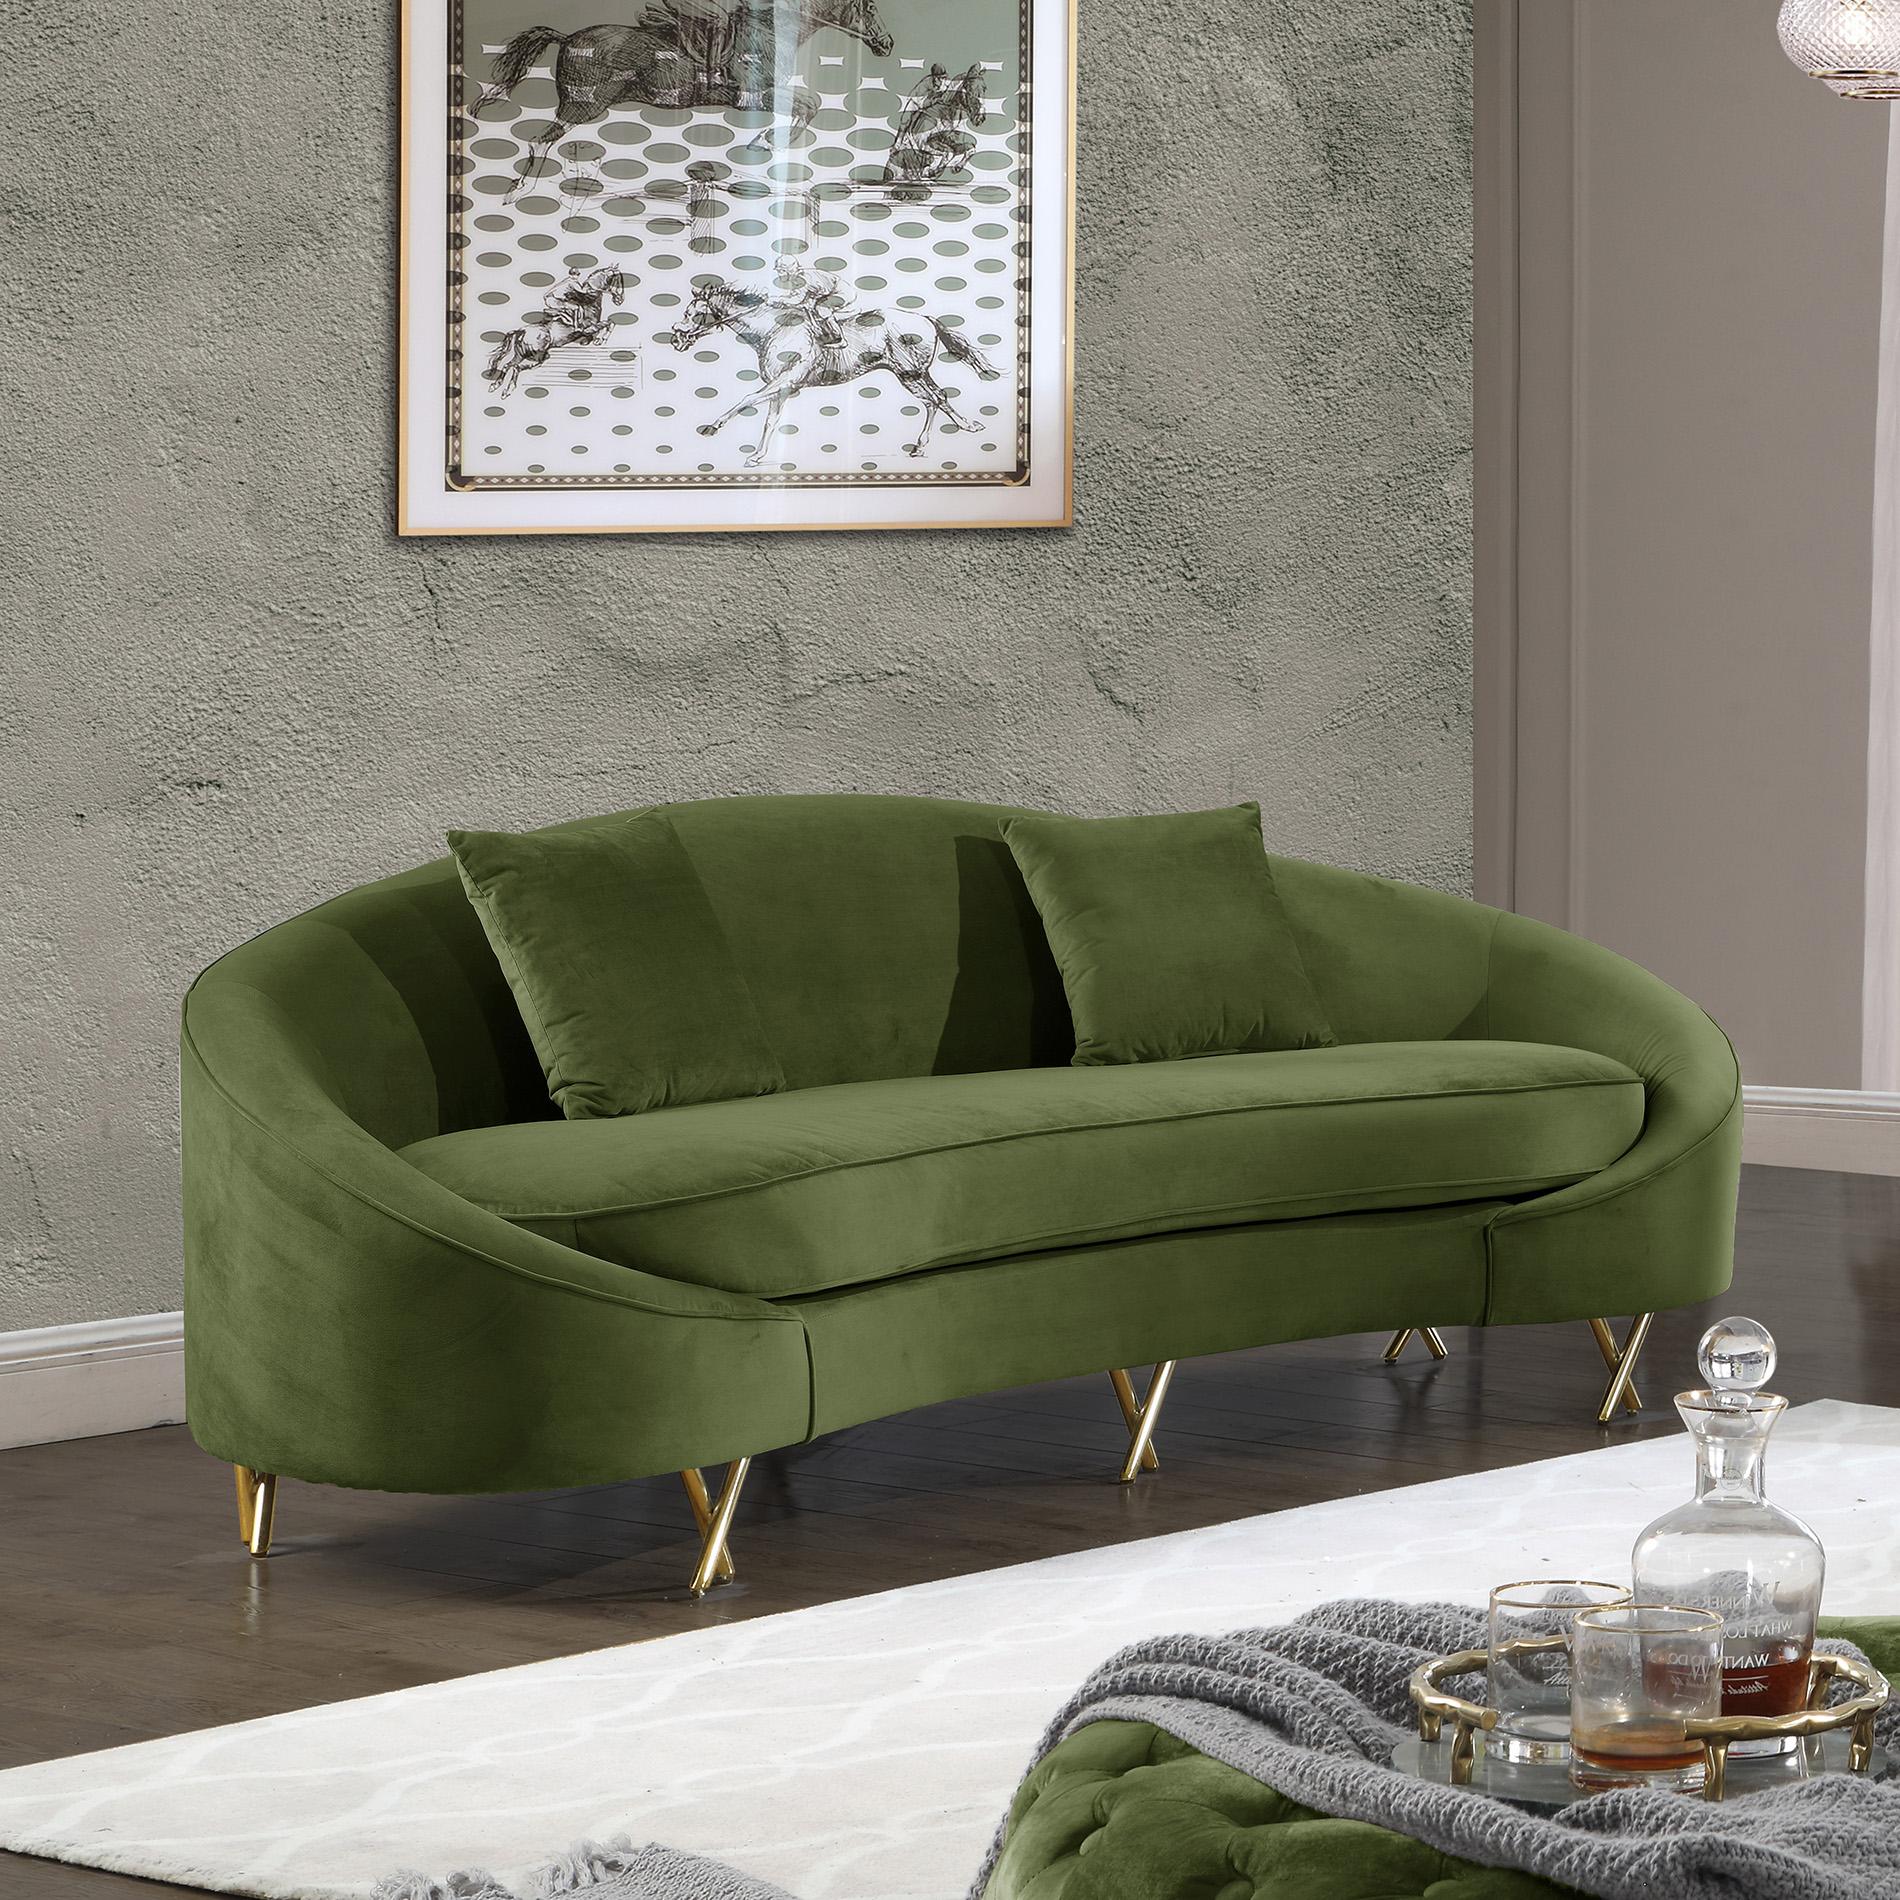 Contemporary, Modern Sofa SERPENTINE 679Olive-S 679Olive-S in Olive Velvet